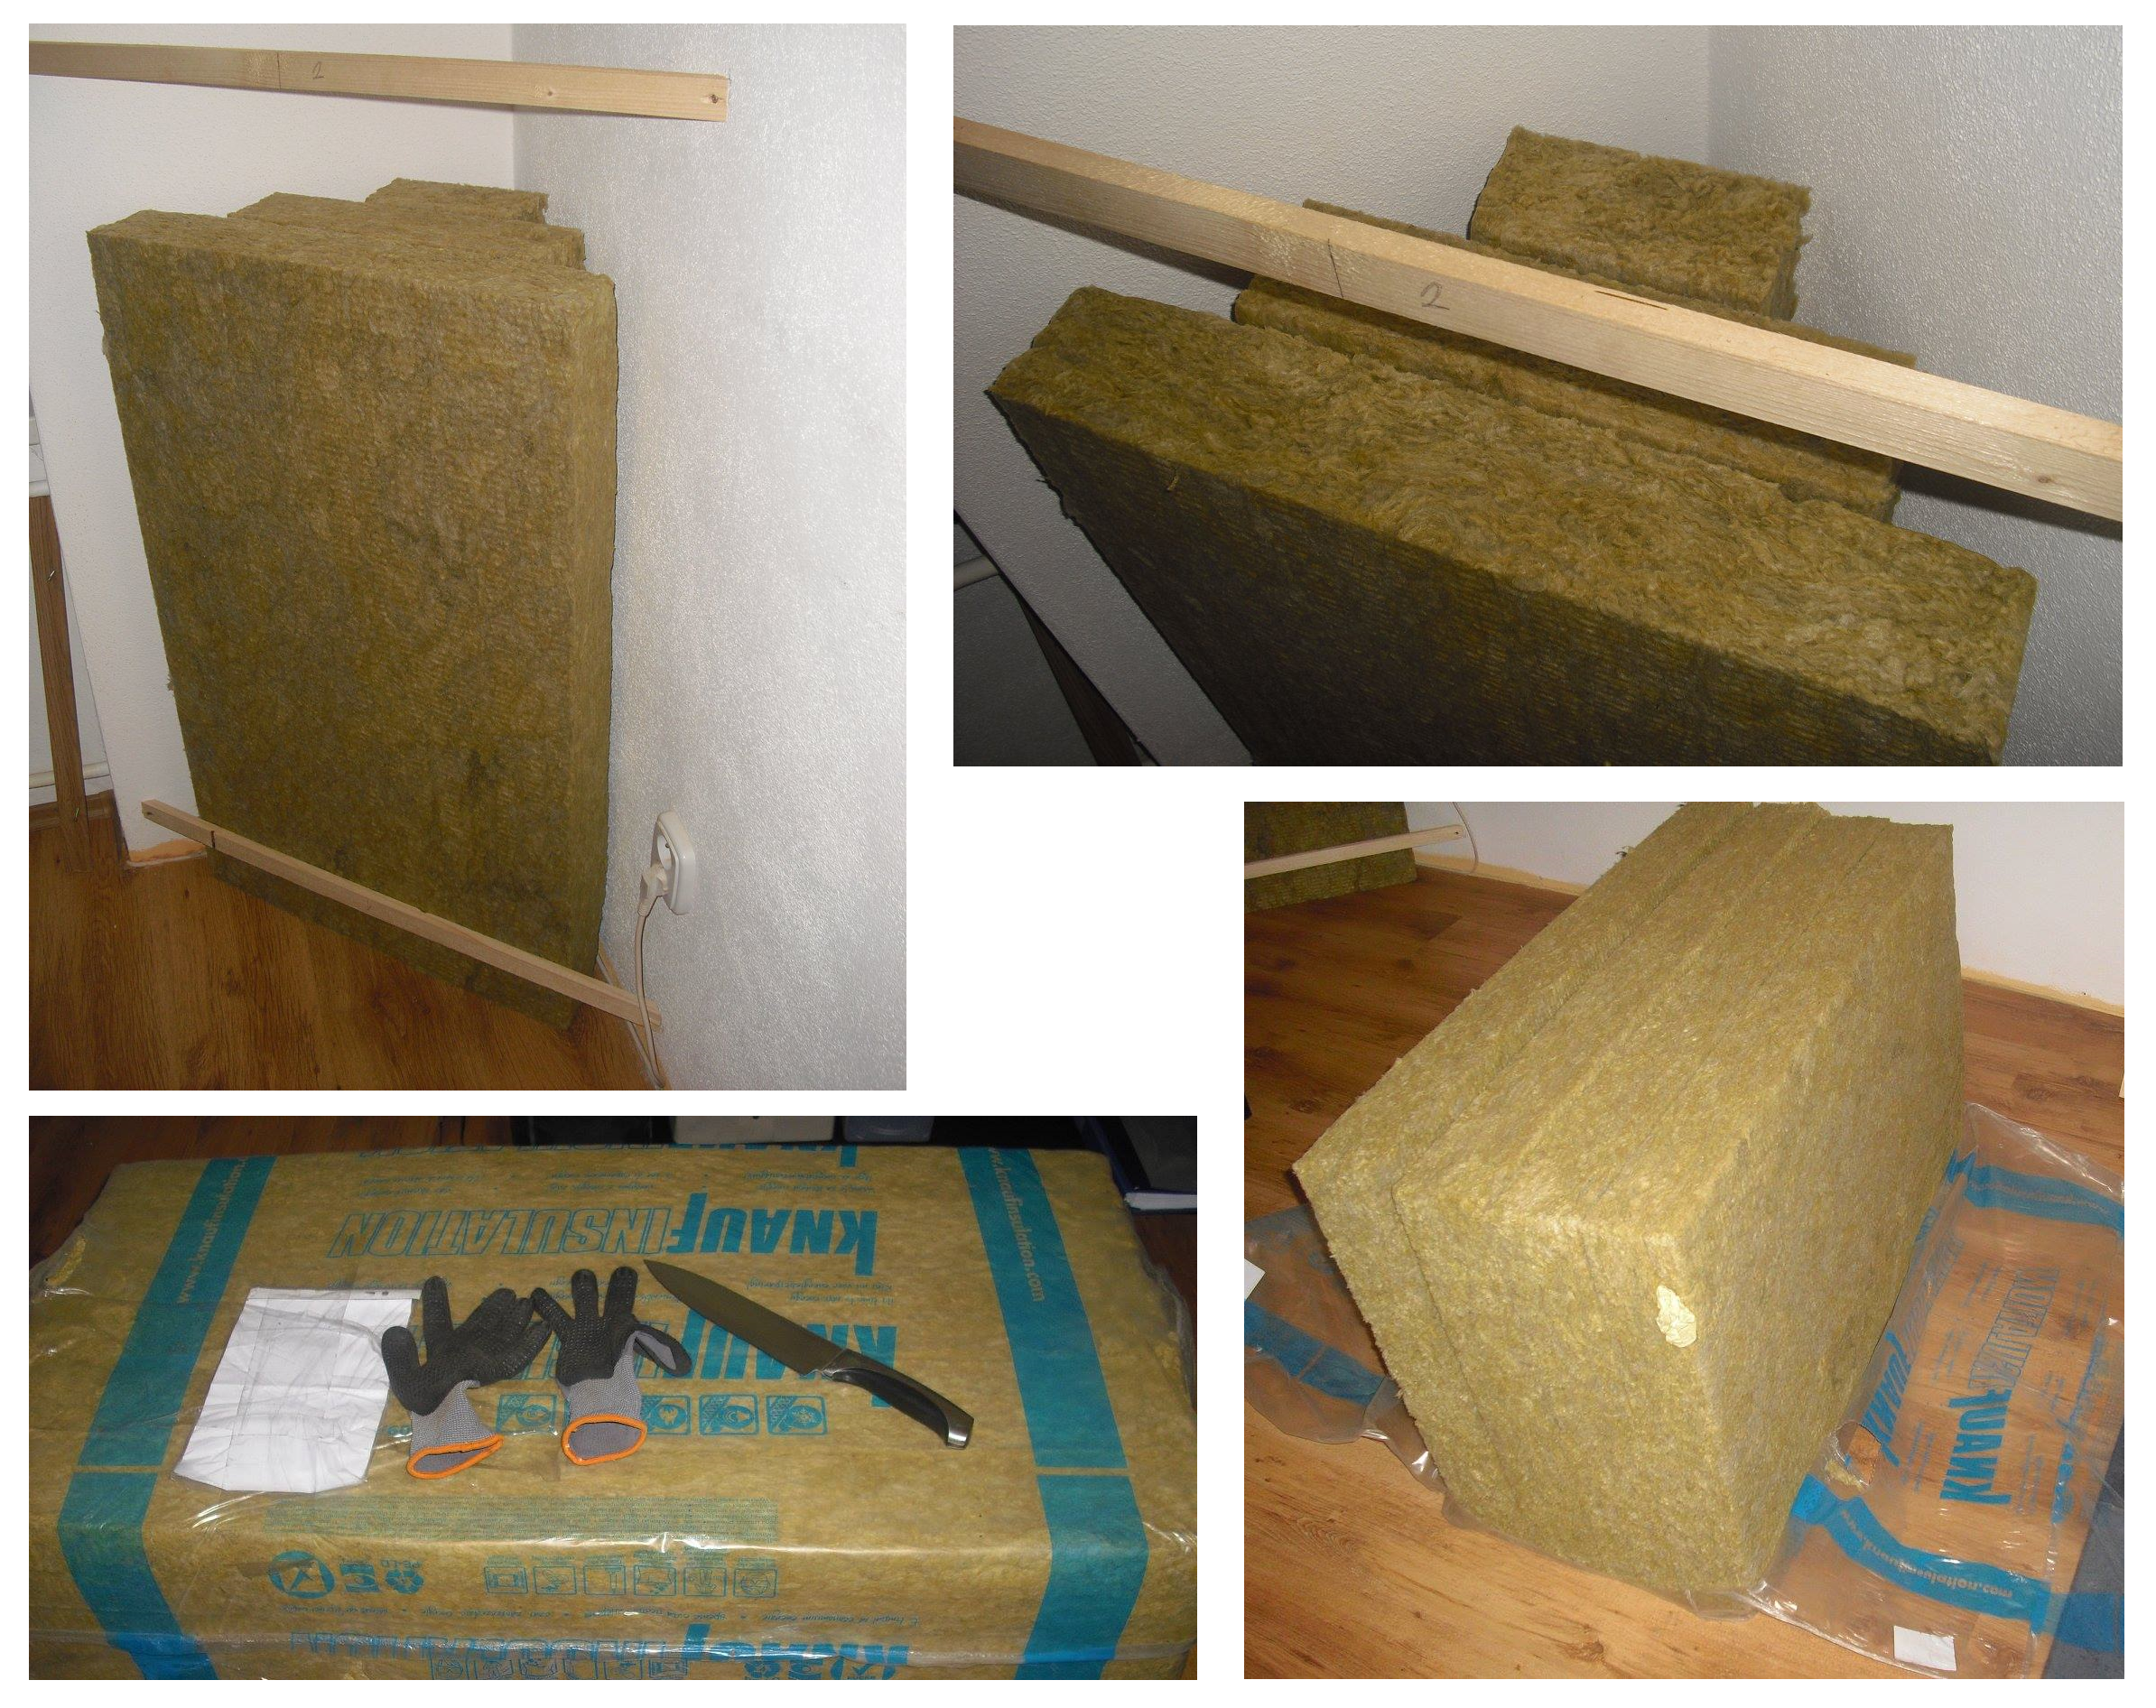 Photo of installation of corner bass trap insulation in progress